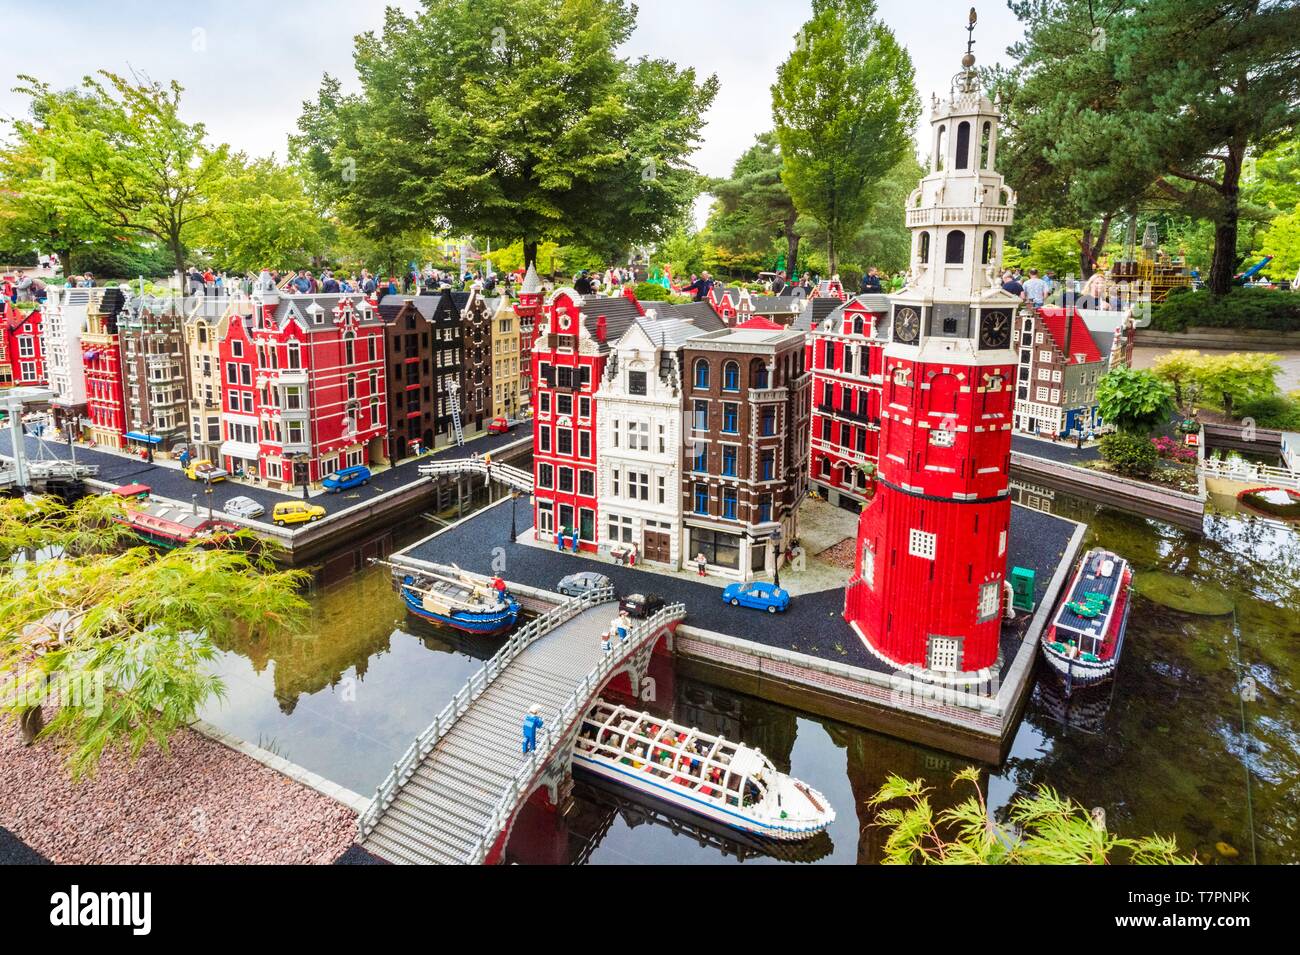 Dinamarca, Jutlandia, Billund, Legoland® Billund es el primer parque  Legoland establecido en 1968, cerca de la sede de la compañía LEGO® (el  término Lego se deriva del danés leg godt significado juega